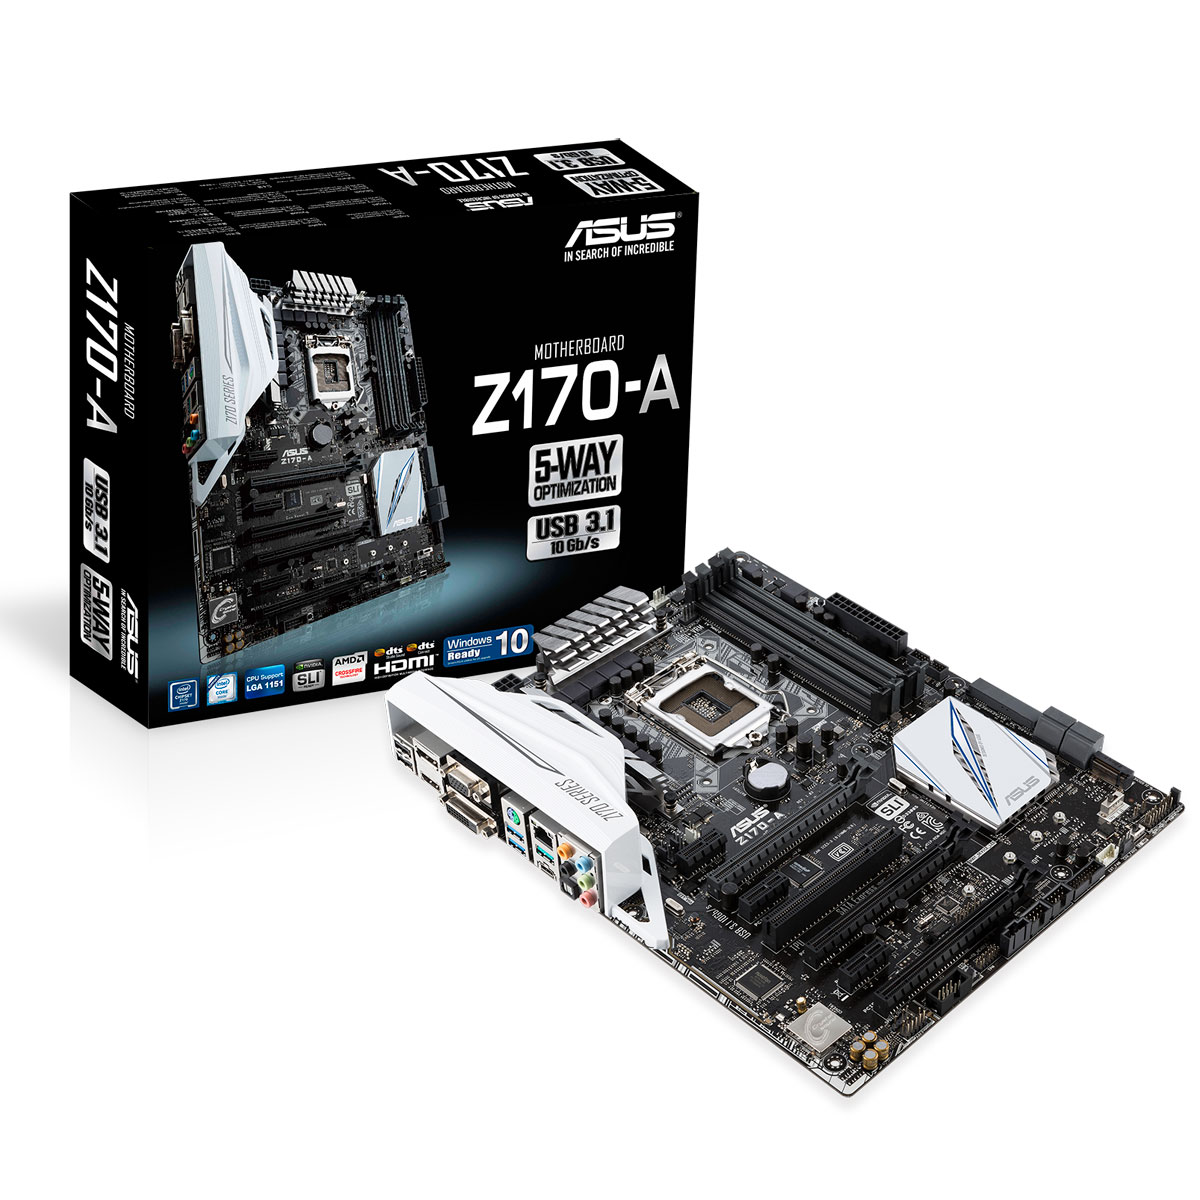 Asus - Asus Z170-A Intel Z170 (Socket 1151) DDR4 ATX Motherboard